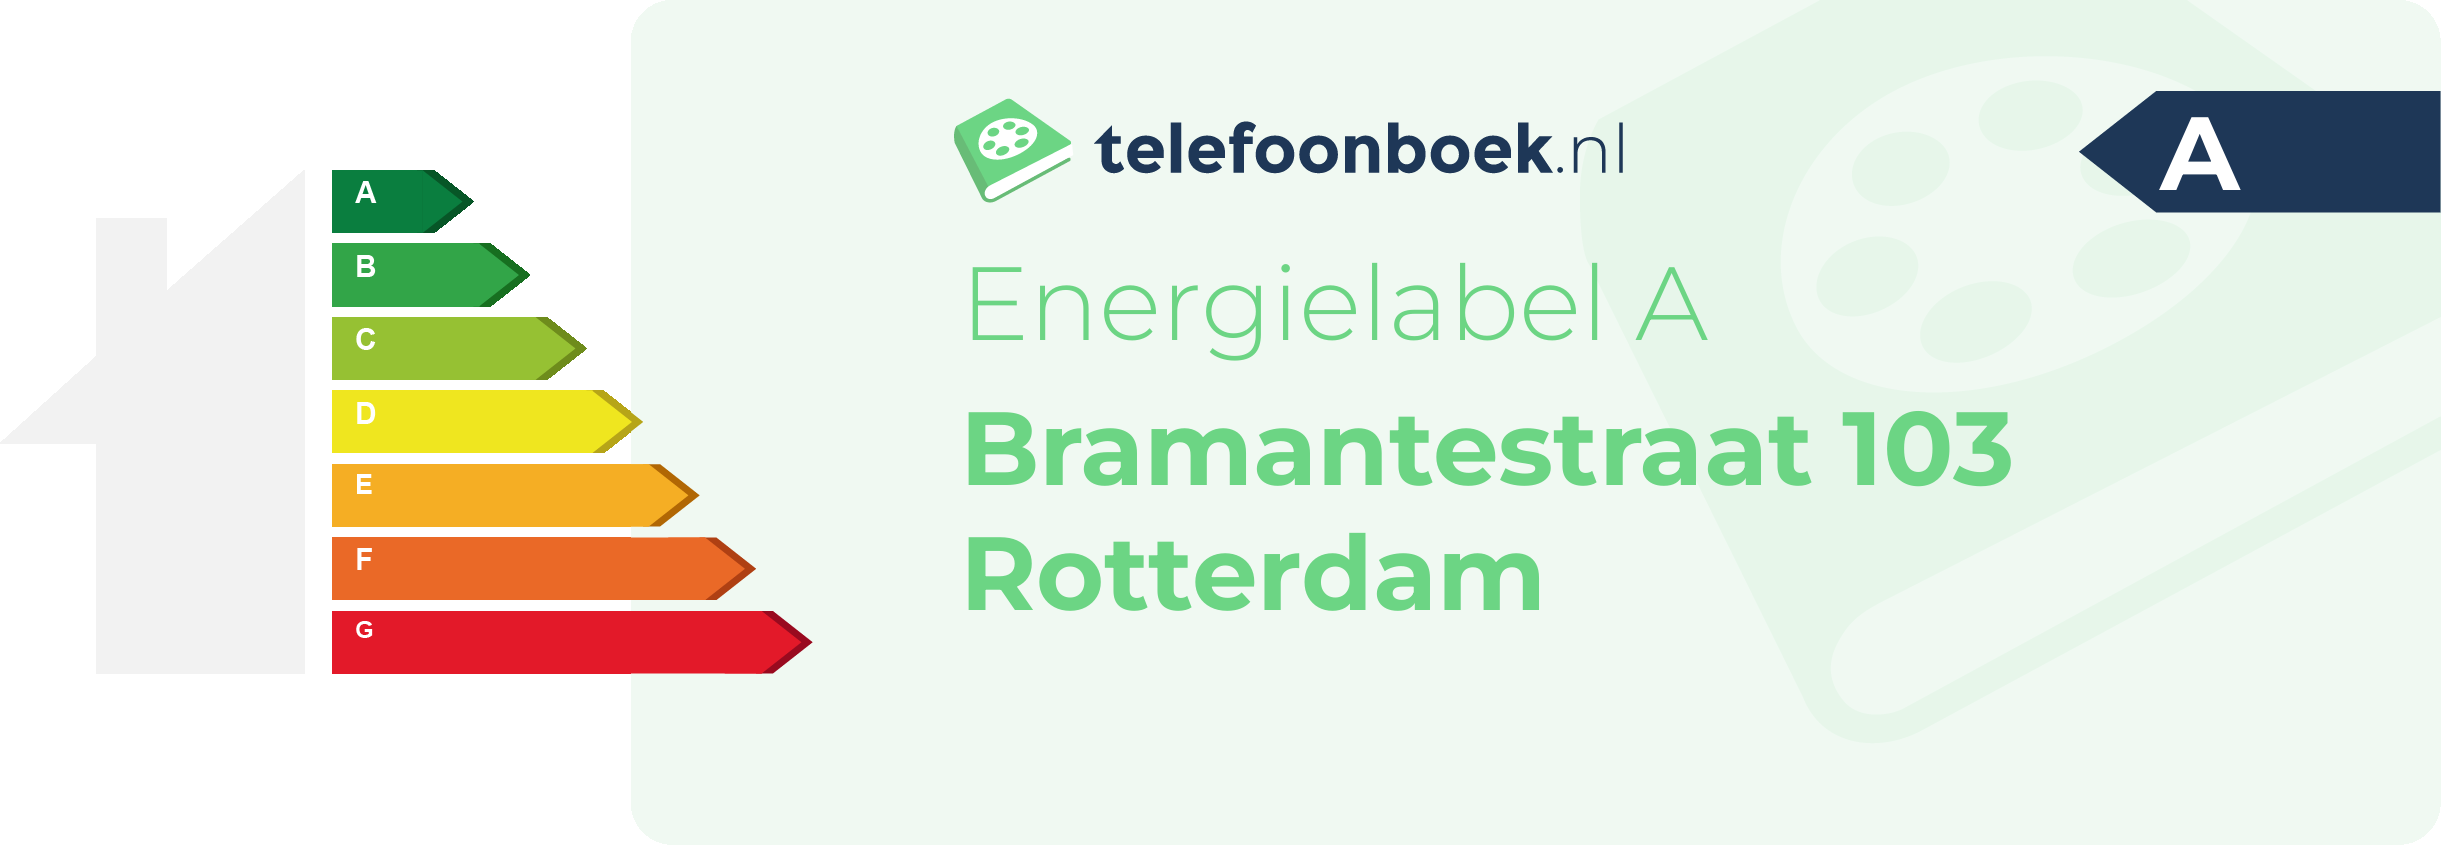 Energielabel Bramantestraat 103 Rotterdam